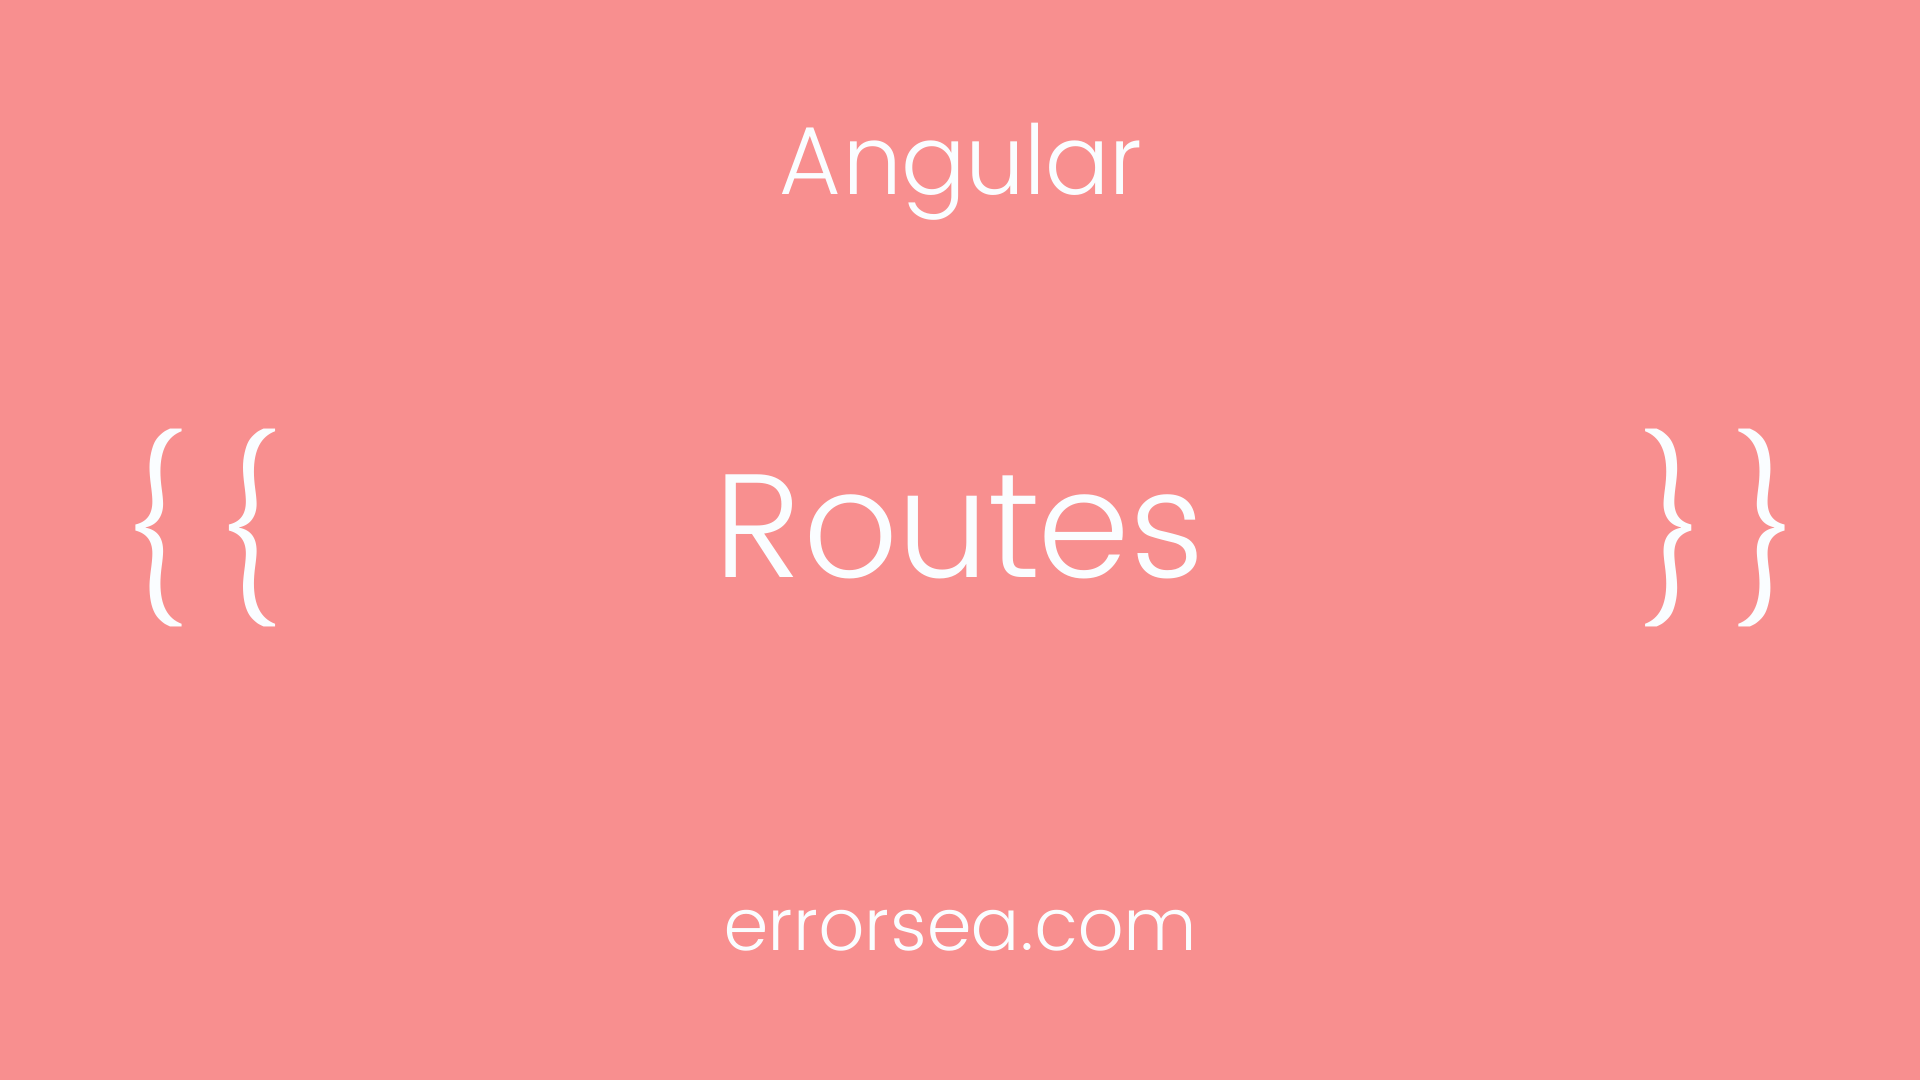 Angular Routes